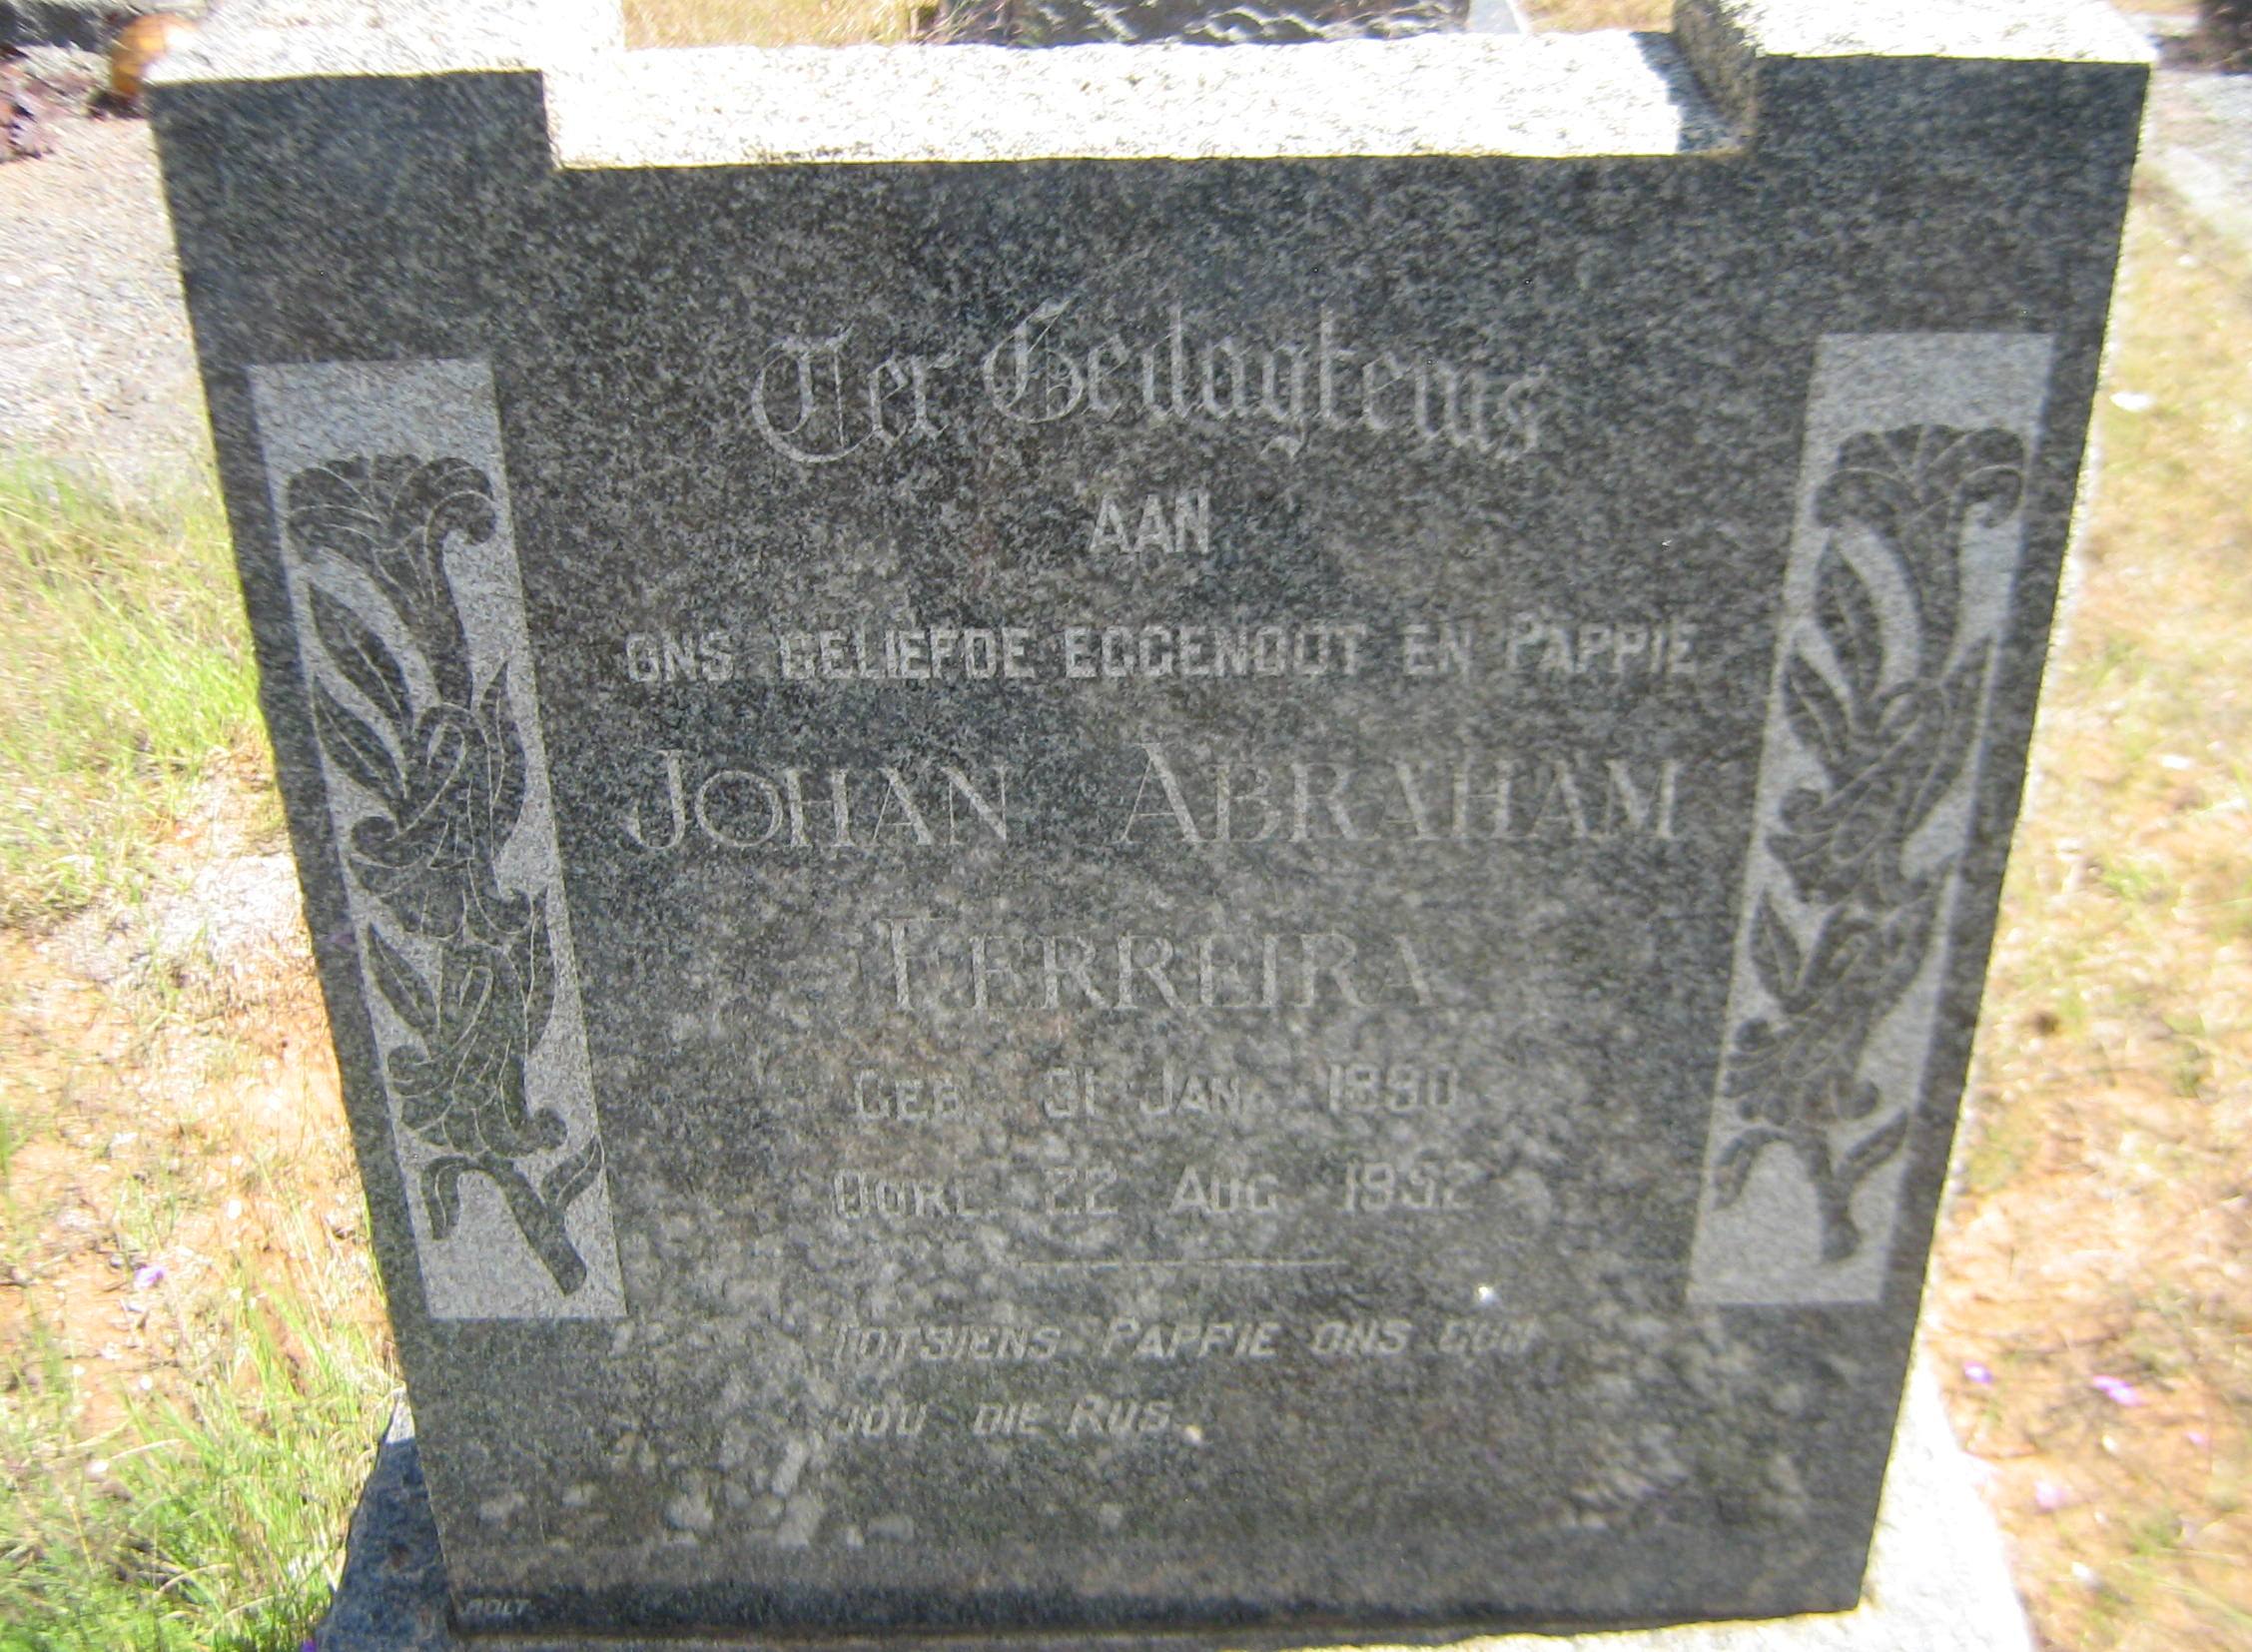 FERREIRA Johan Abraham 1890-1952